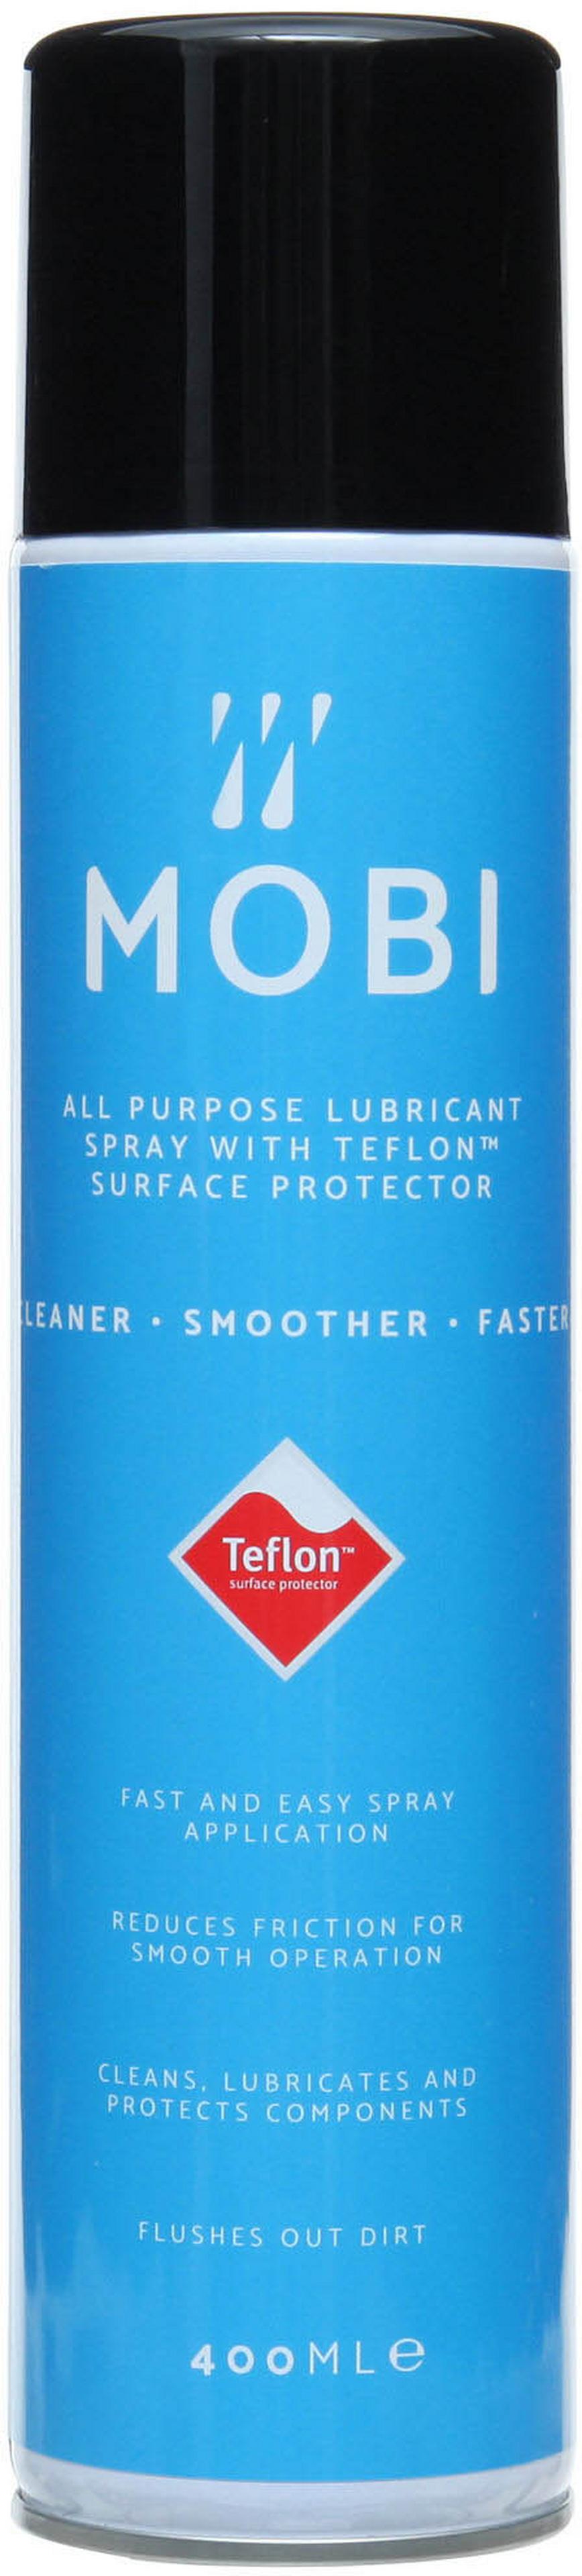 Mobi All Weather Lubricant Spray with Teflon Aerosol